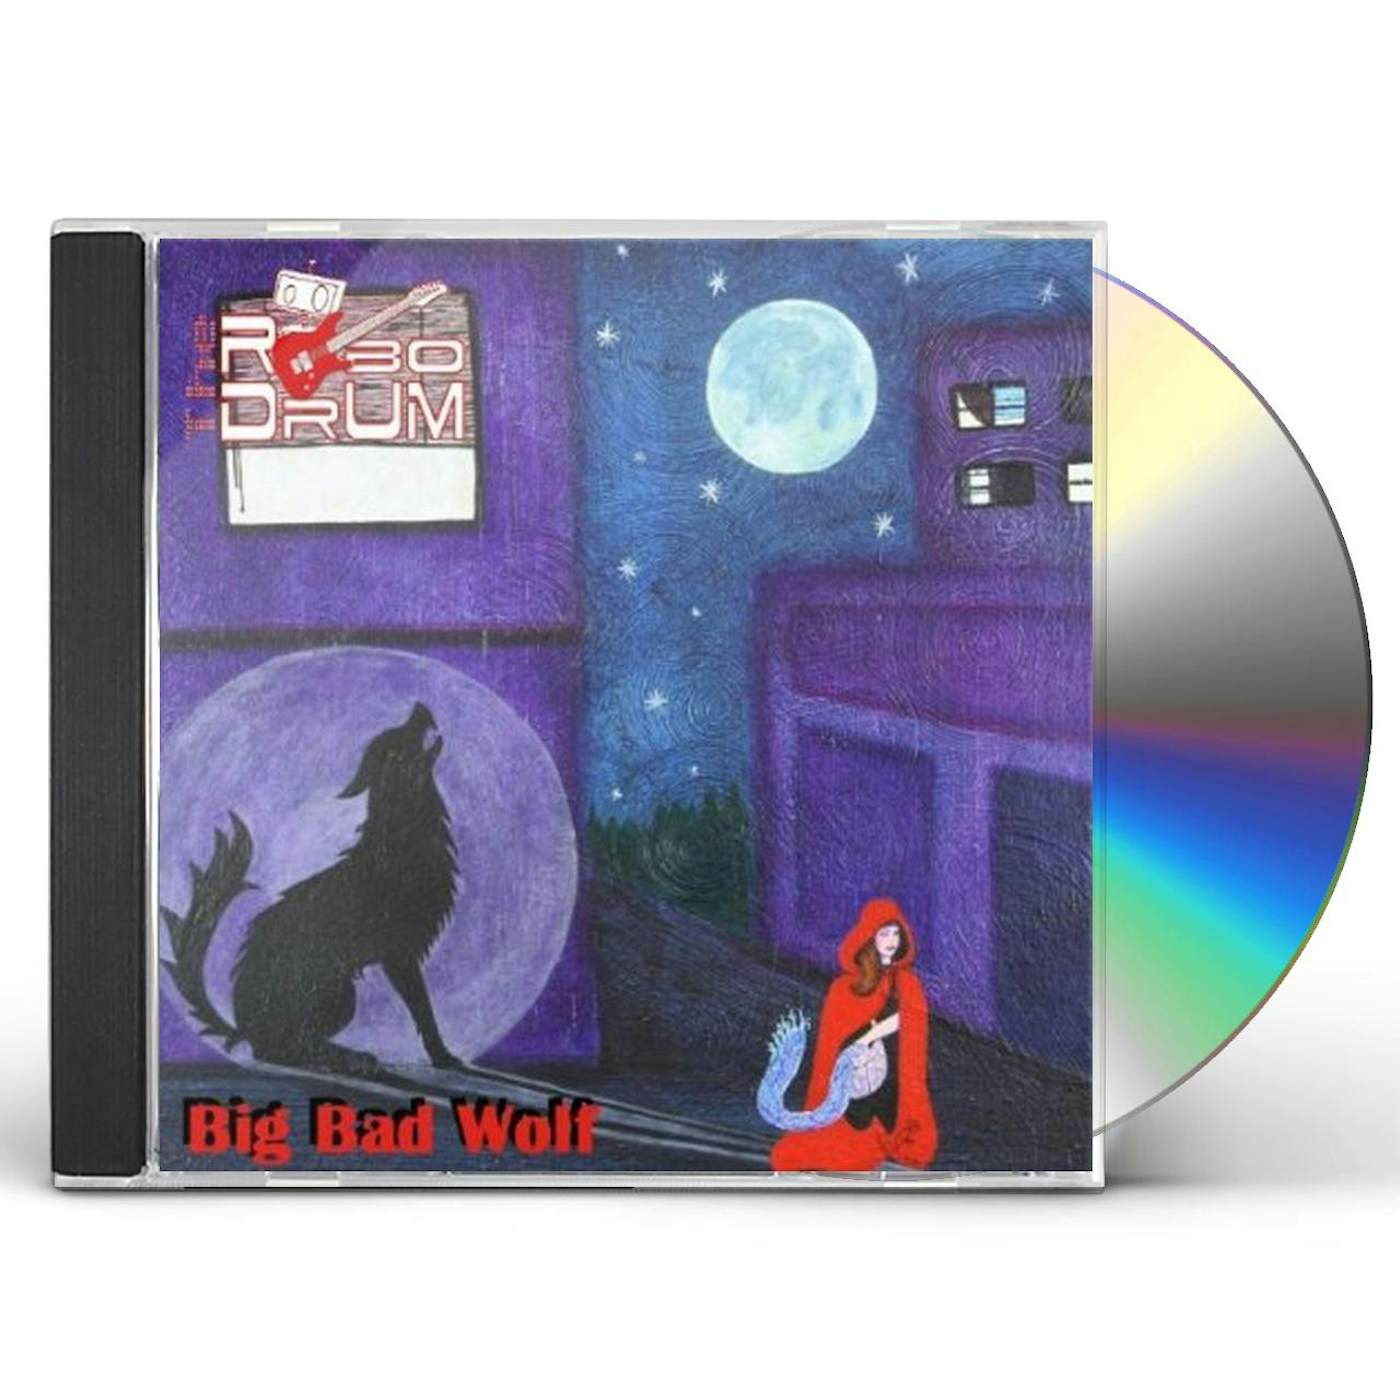 Robodrum BIG BAD WOLF CD